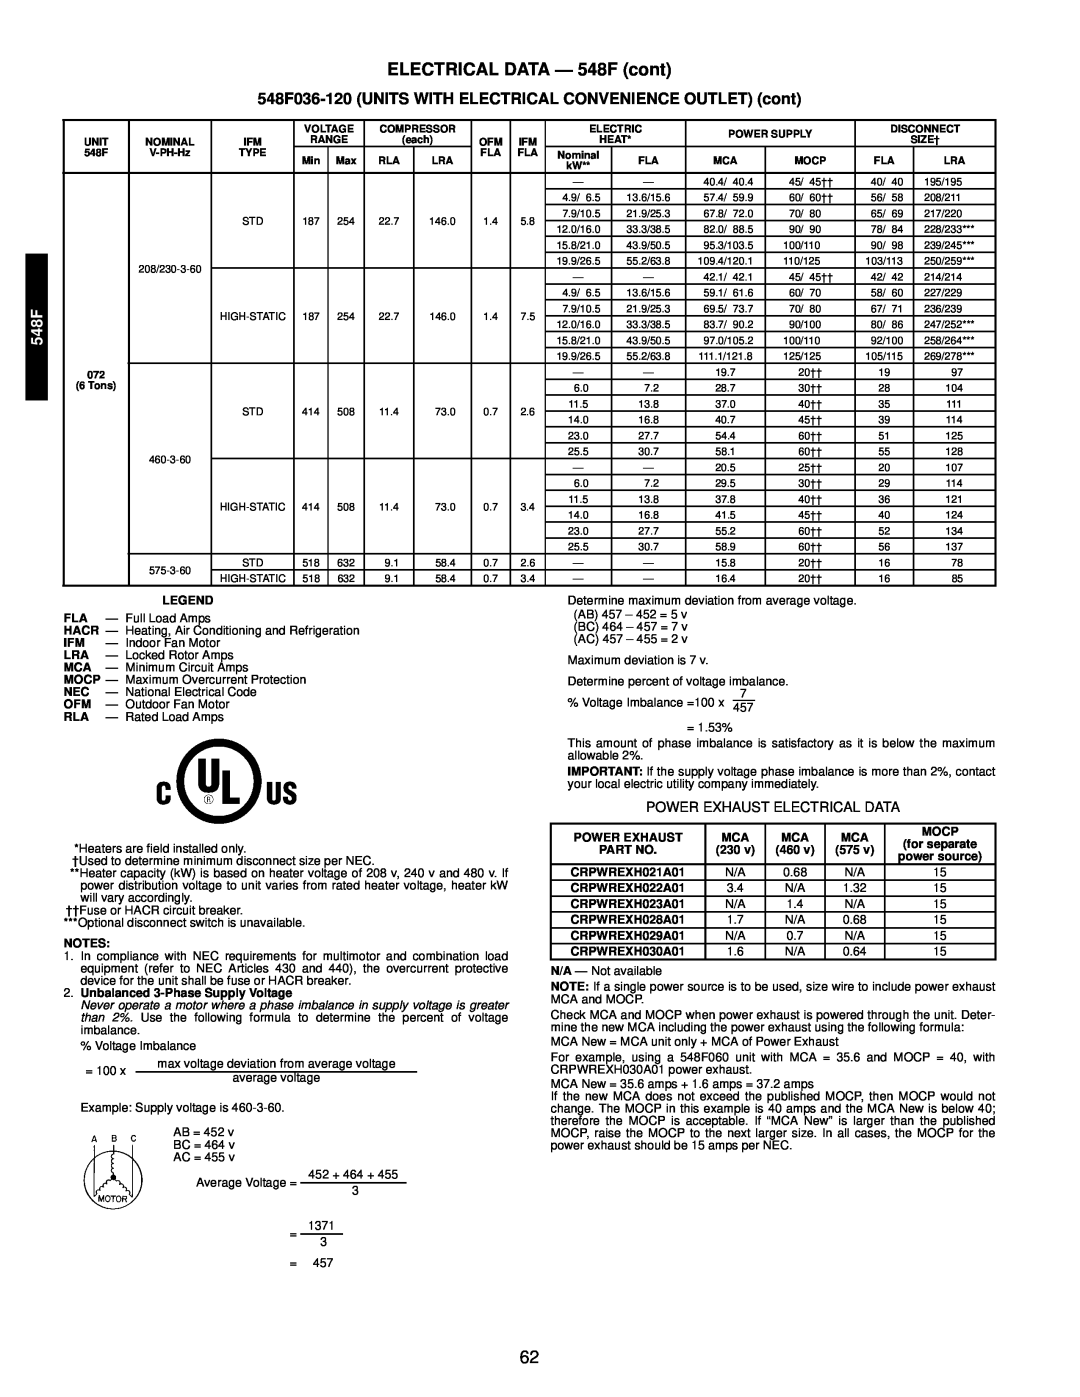 Bryant 549C manual ELECTRICAL DATA - 548F cont, Legend 